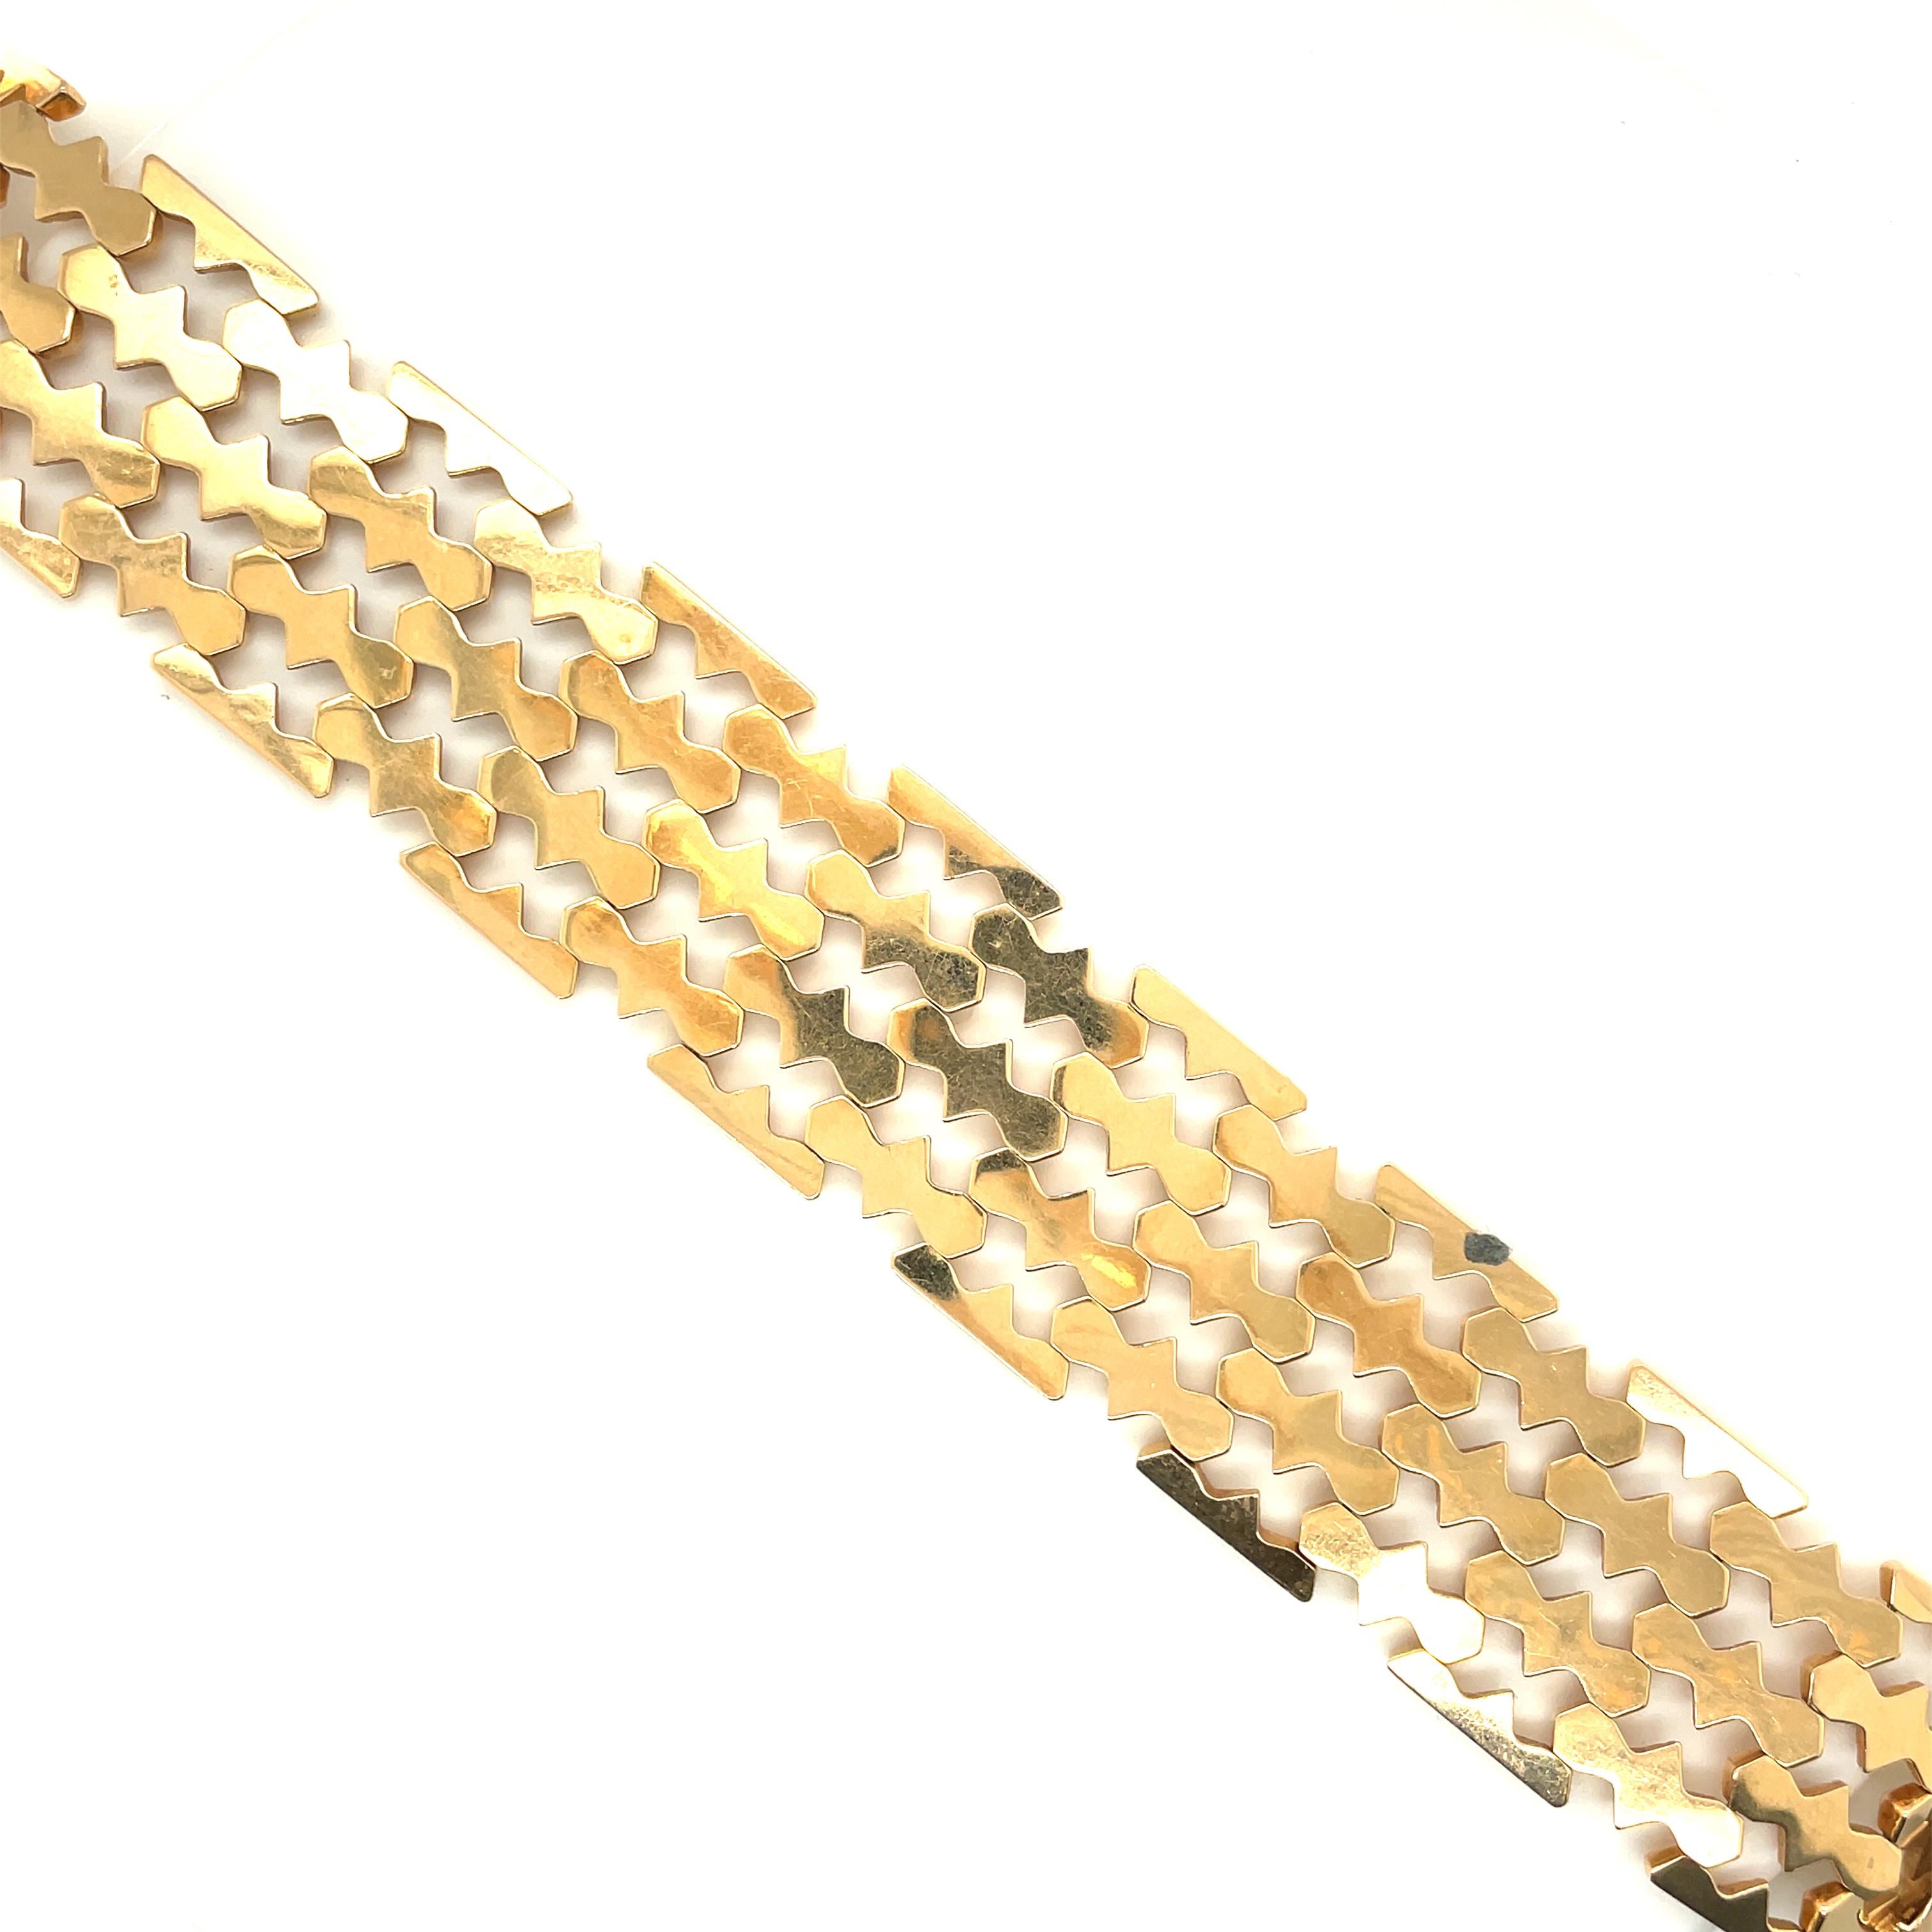 18k yellow gold bracelet